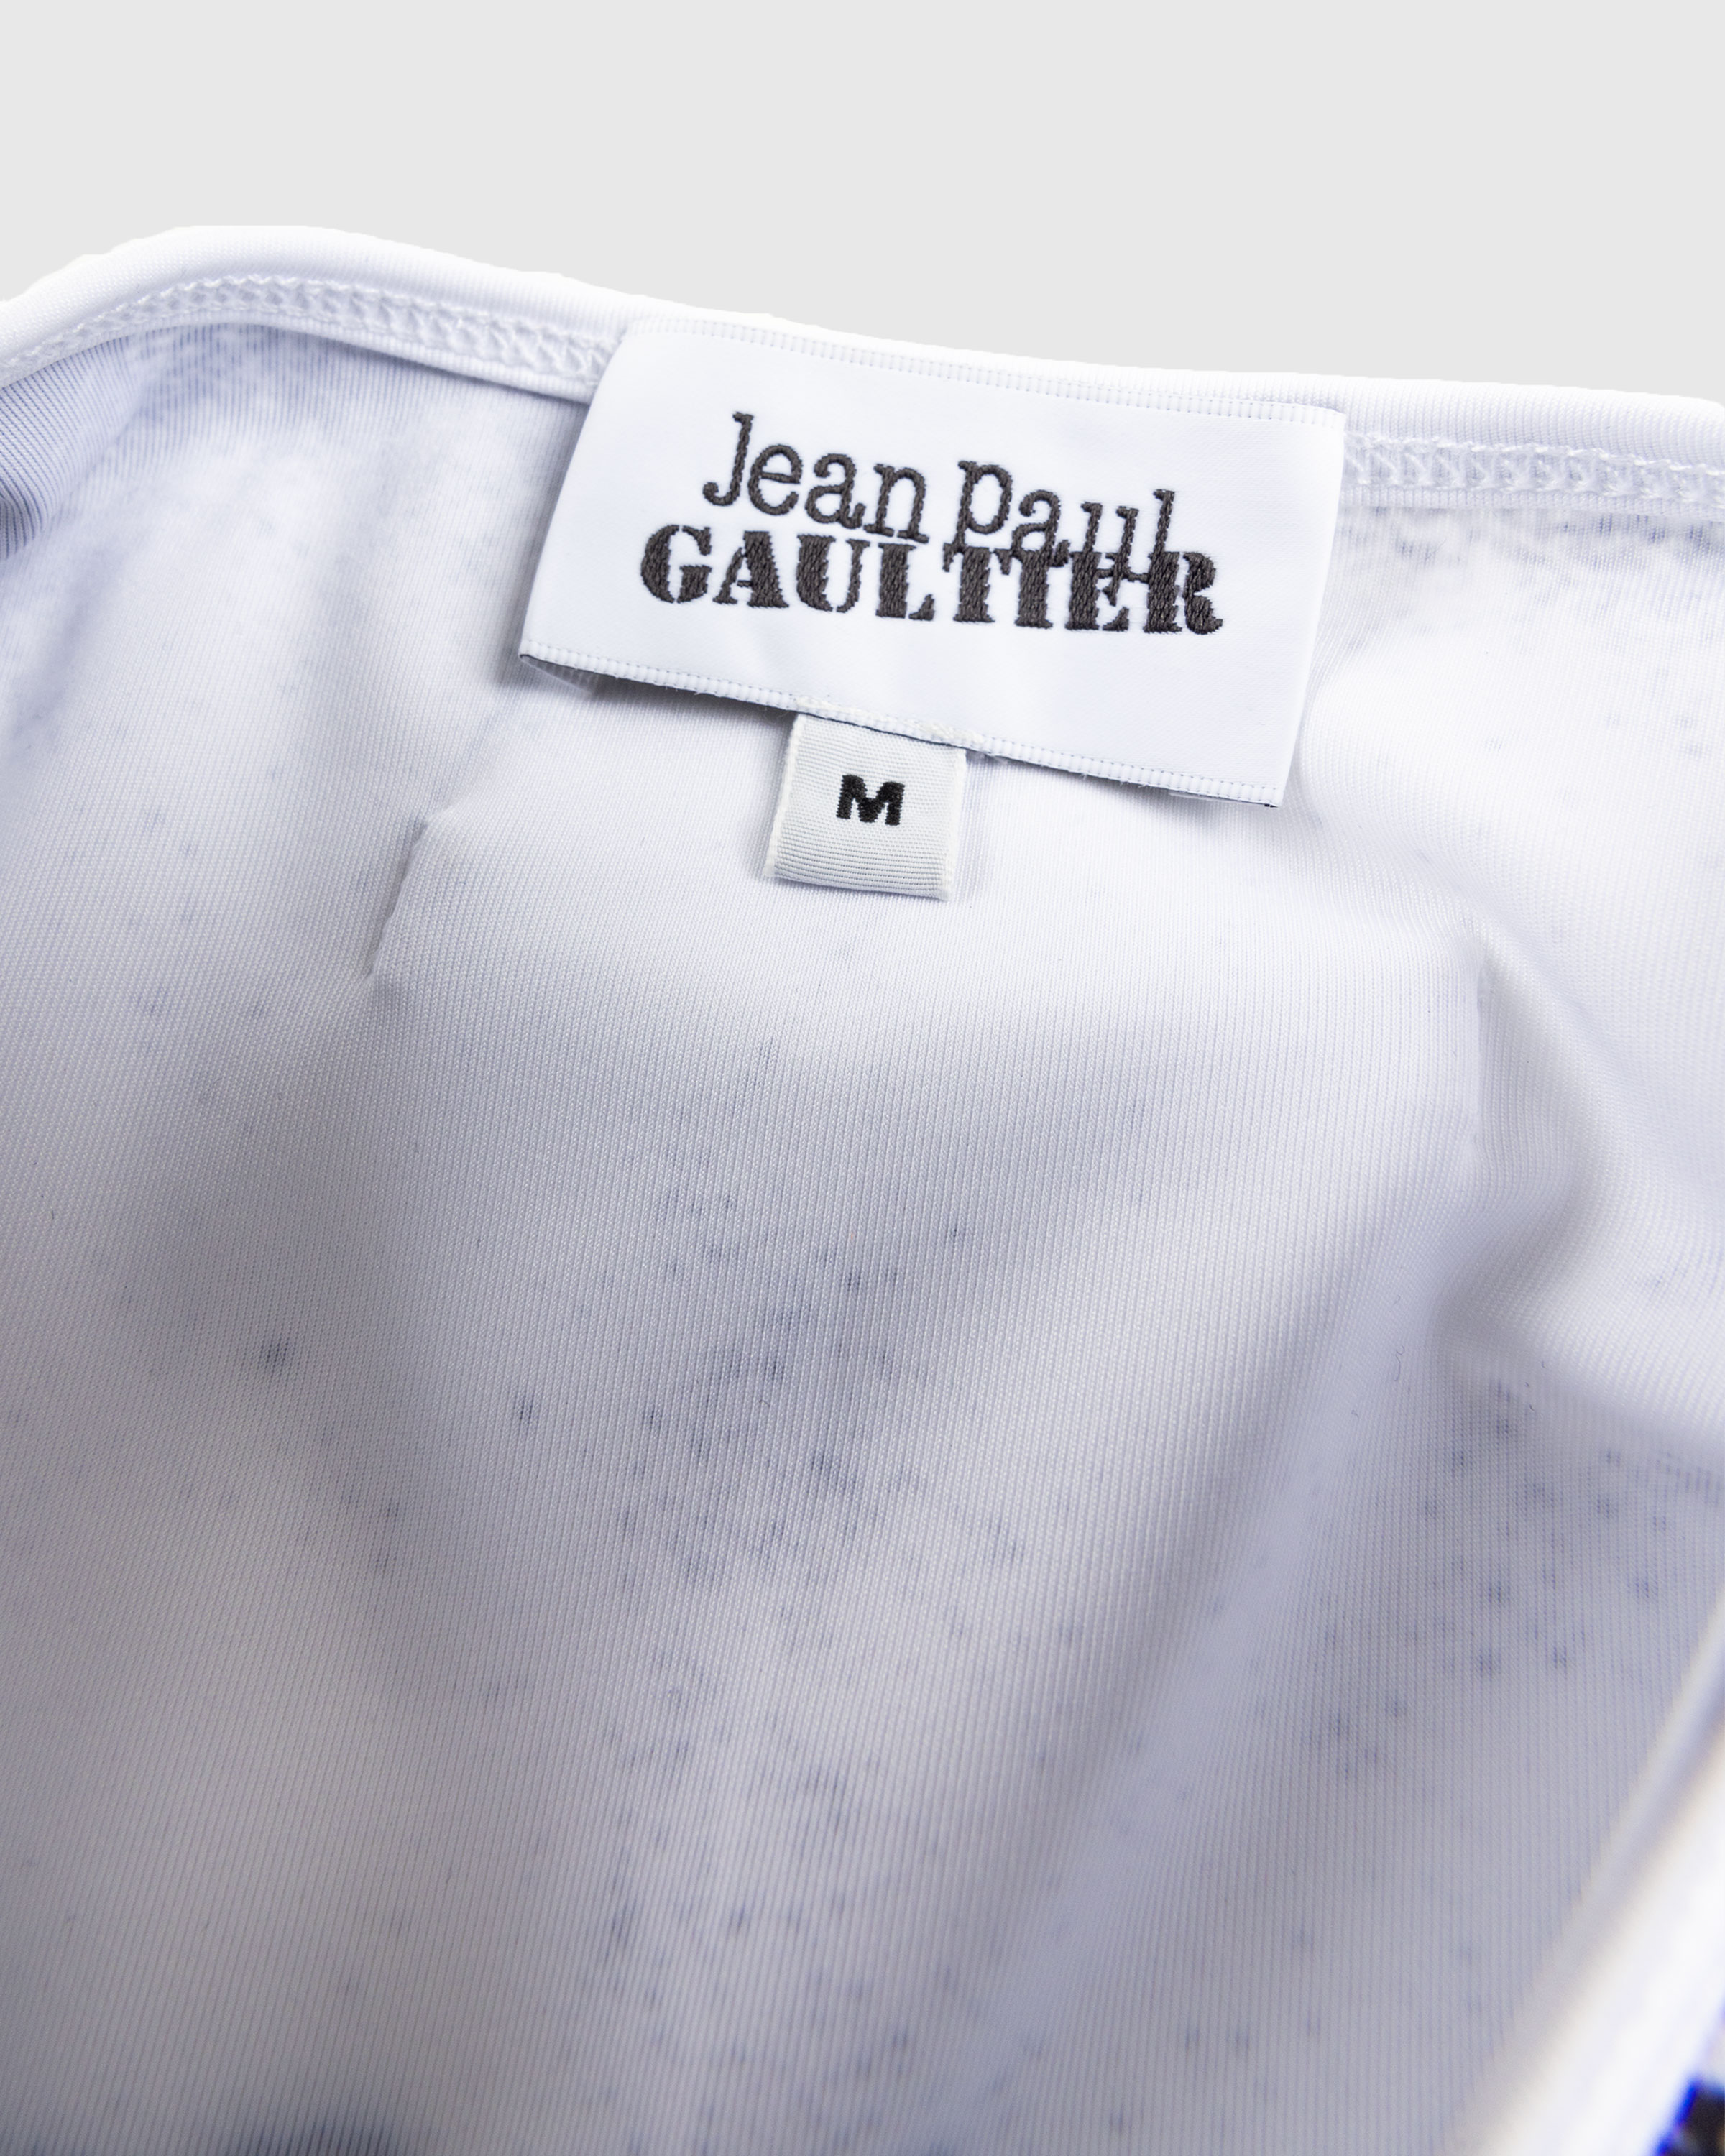 Jean Paul Gaultier – Long-Sleeve Gaultier Paris Top White/Black - Longsleeves - White - Image 6